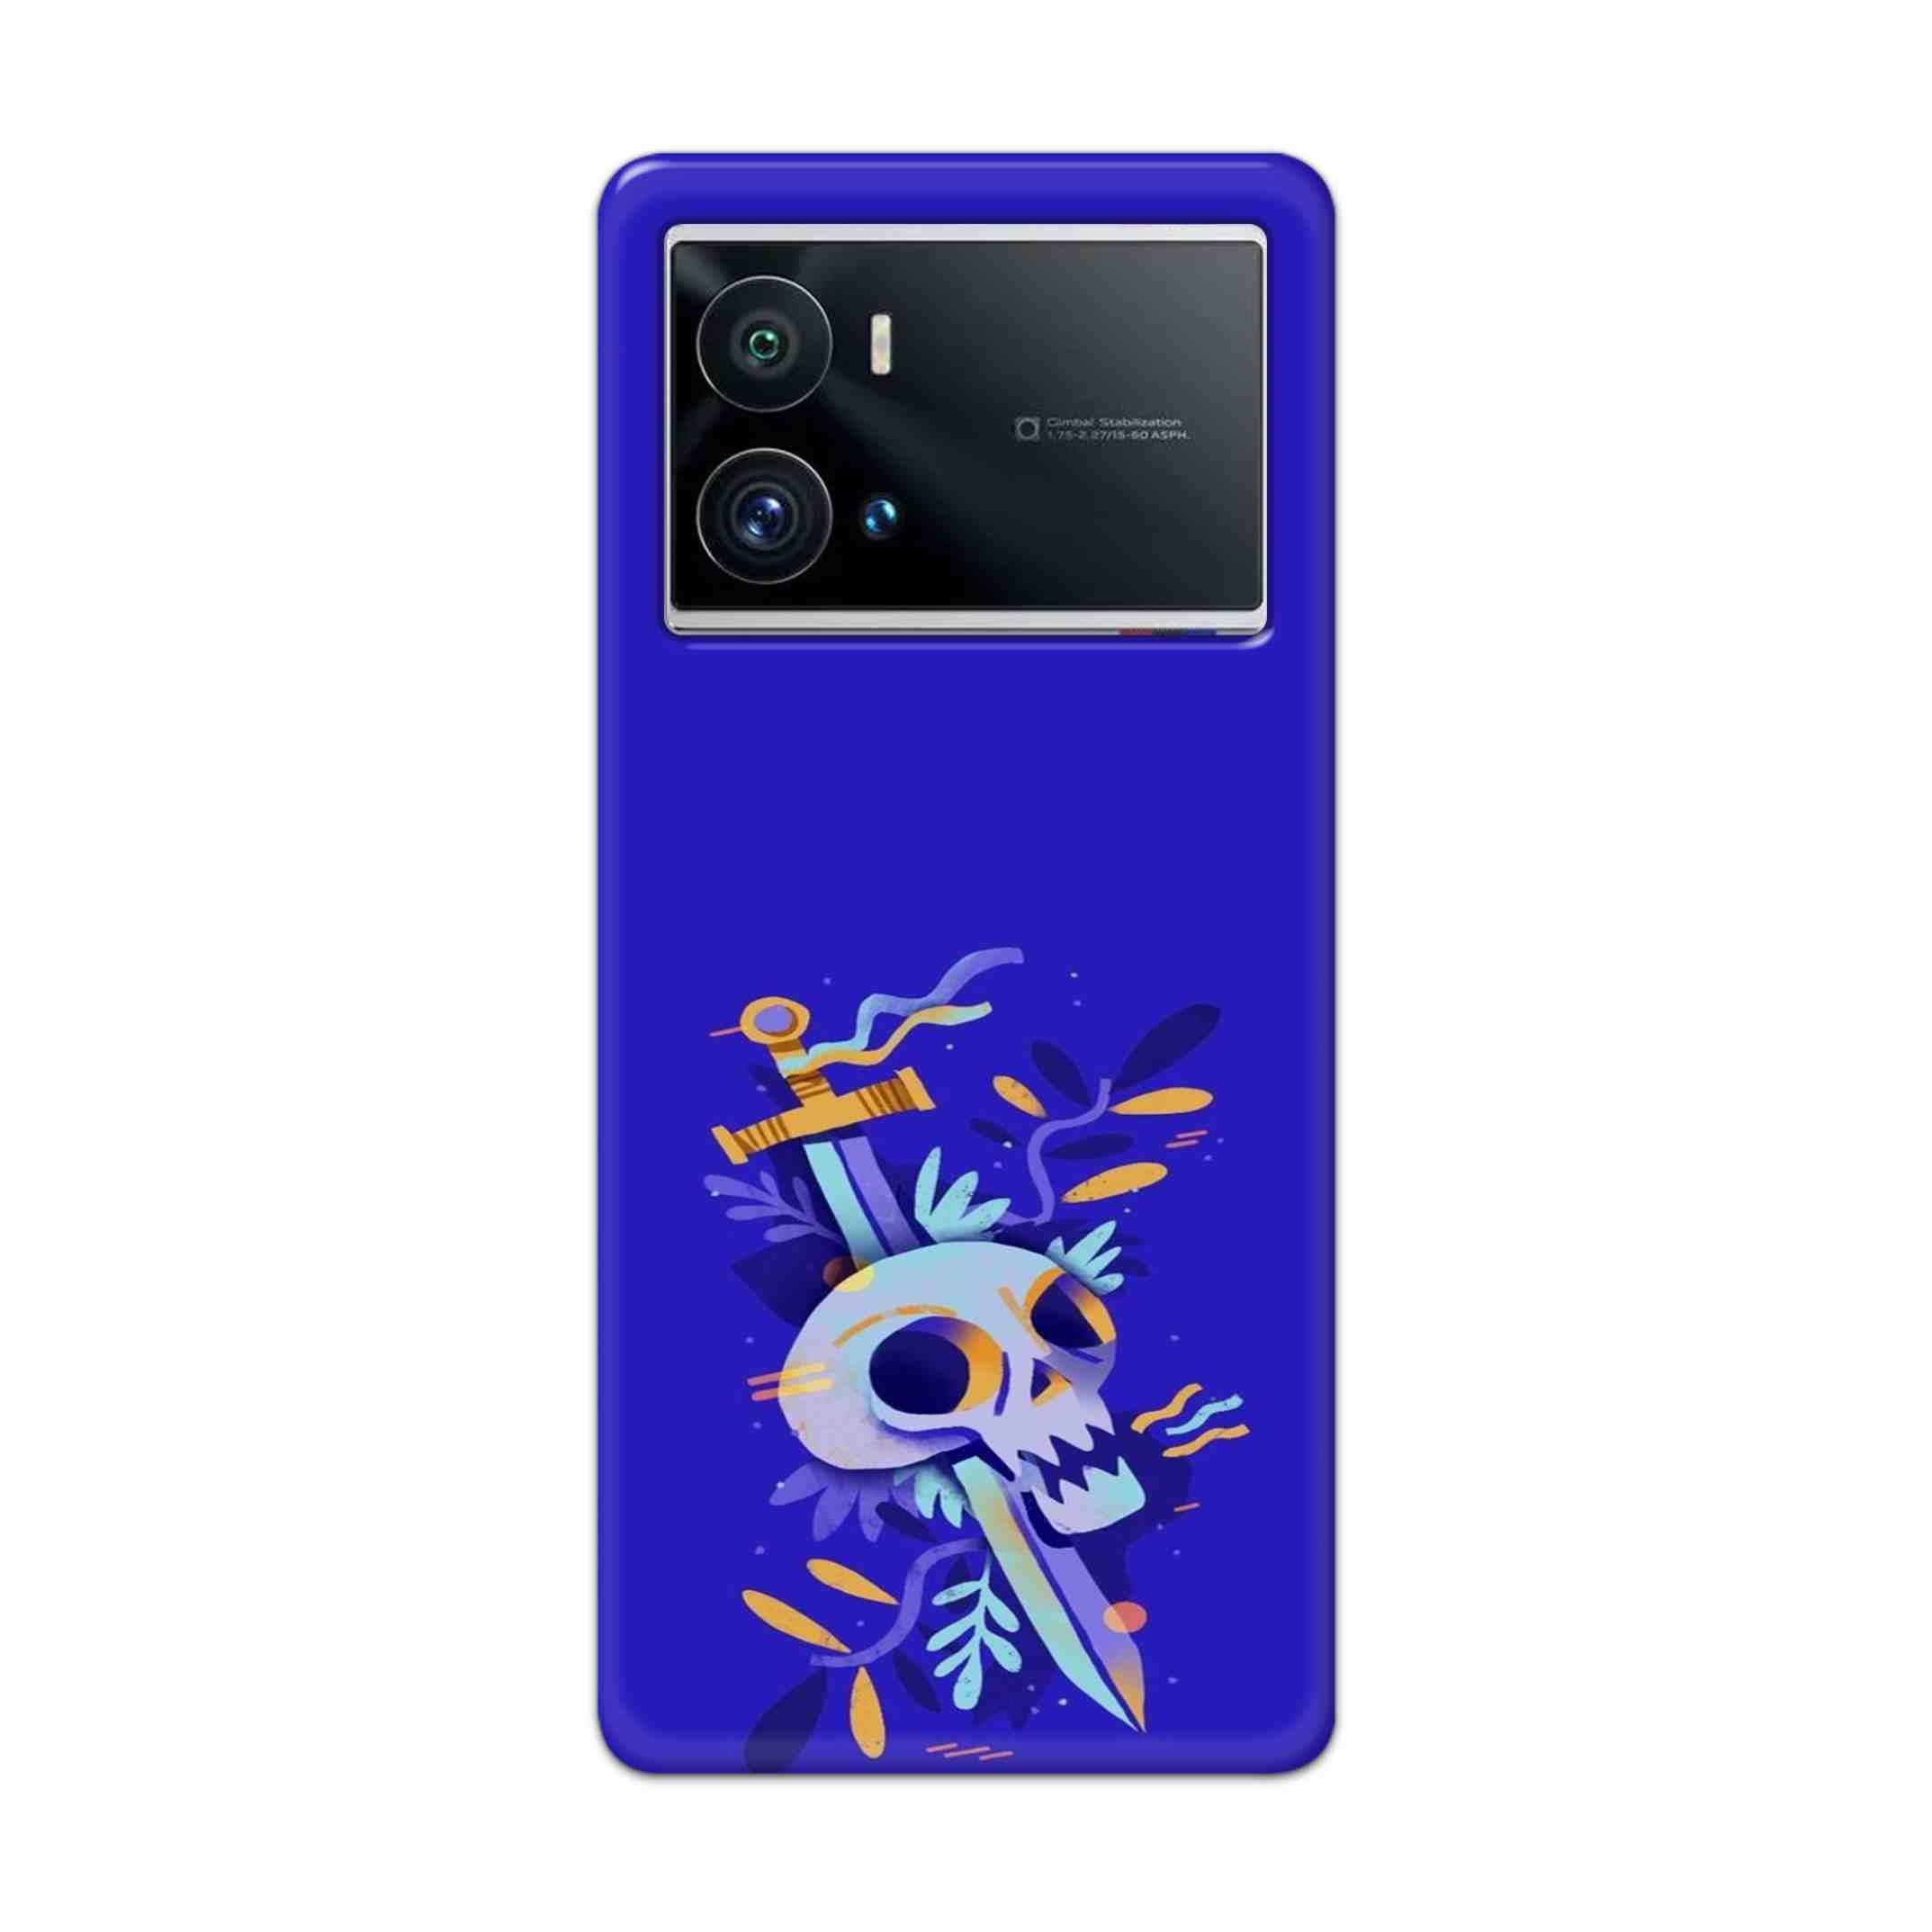 Buy Blue Skull Hard Back Mobile Phone Case Cover For iQOO 9 Pro 5G Online